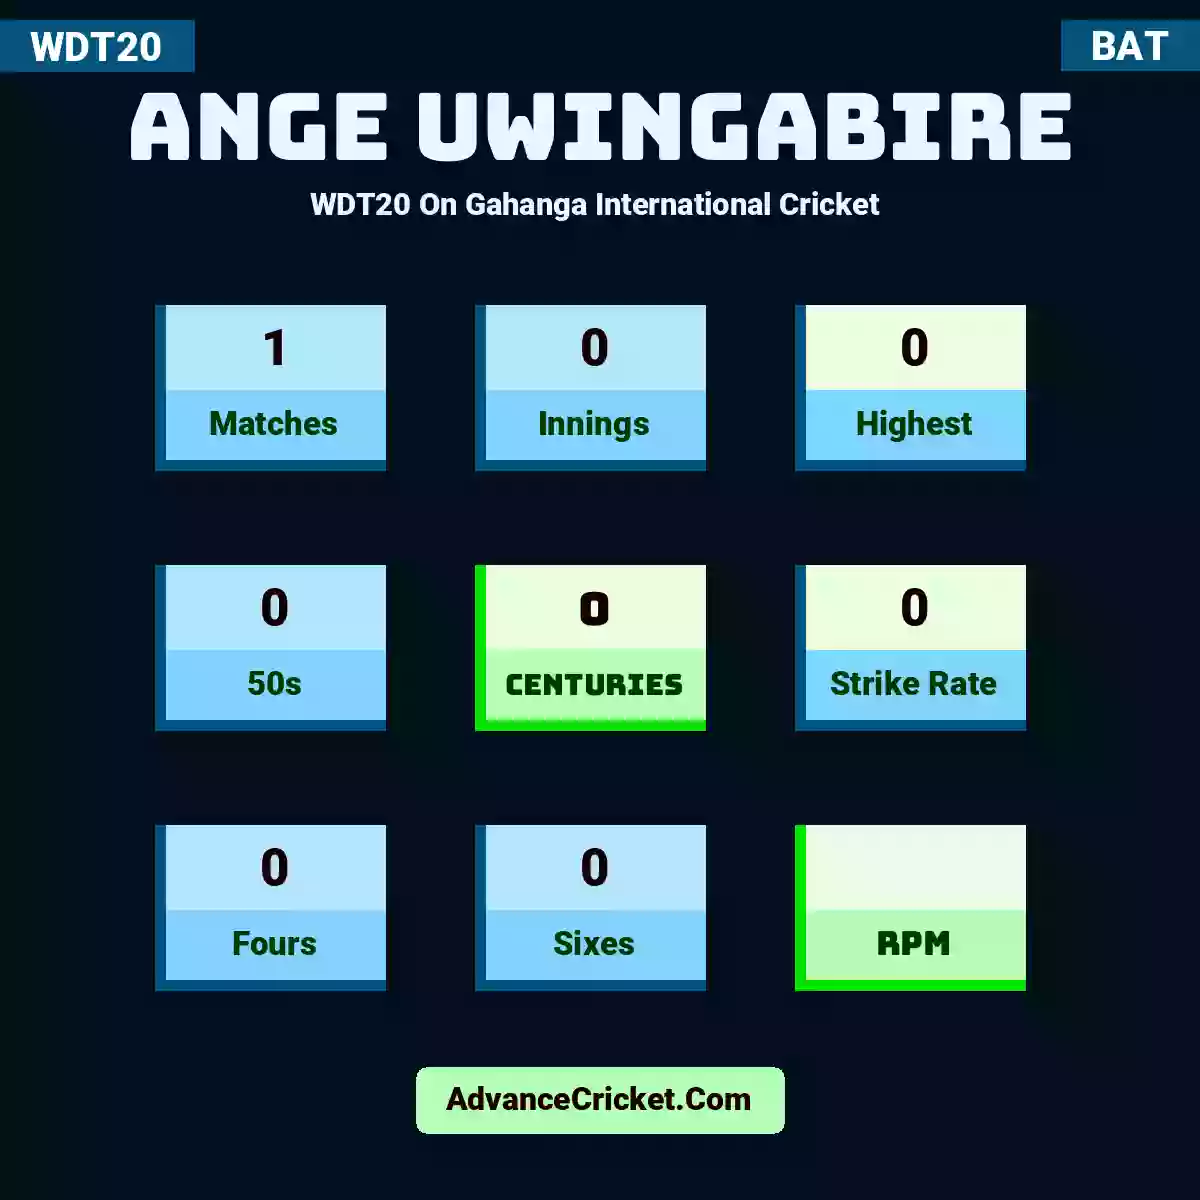 Ange Uwingabire WDT20  On Gahanga International Cricket , Ange Uwingabire played 1 matches, scored 0 runs as highest, 0 half-centuries, and 0 centuries, with a strike rate of 0. A.Uwingabire hit 0 fours and 0 sixes.